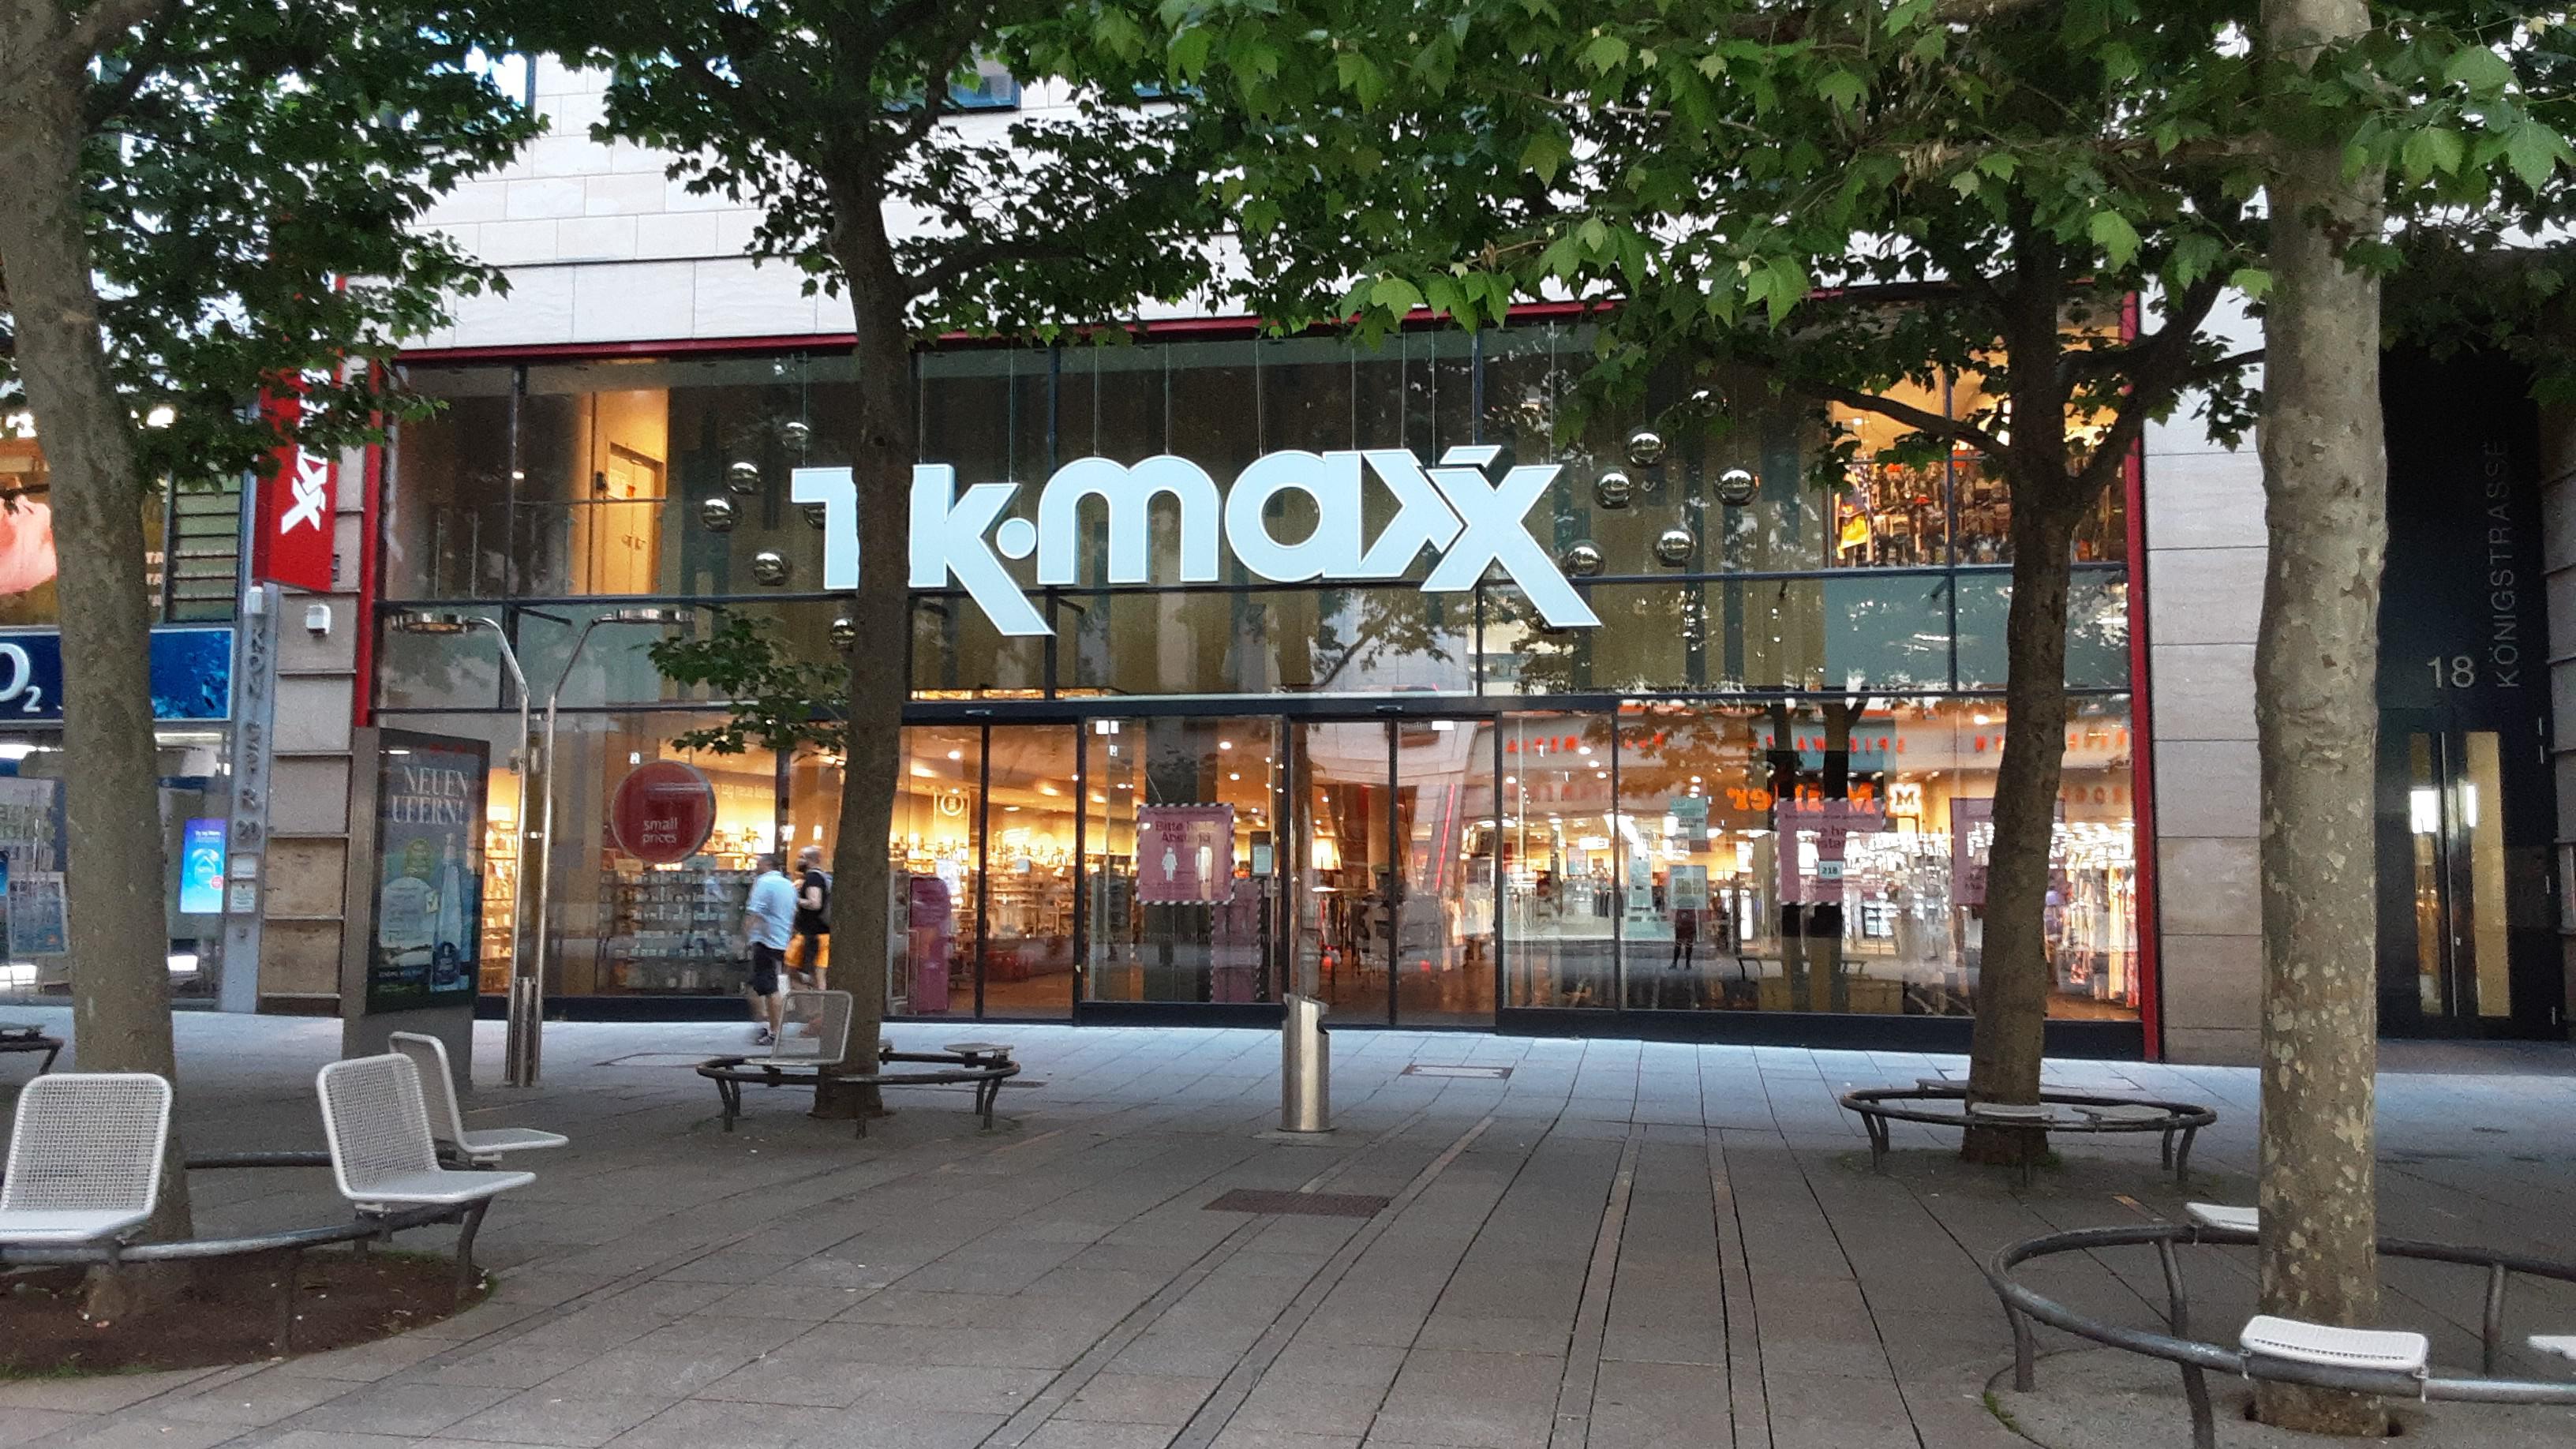 TK Maxx, Königstrasse 18 in Stuttgart